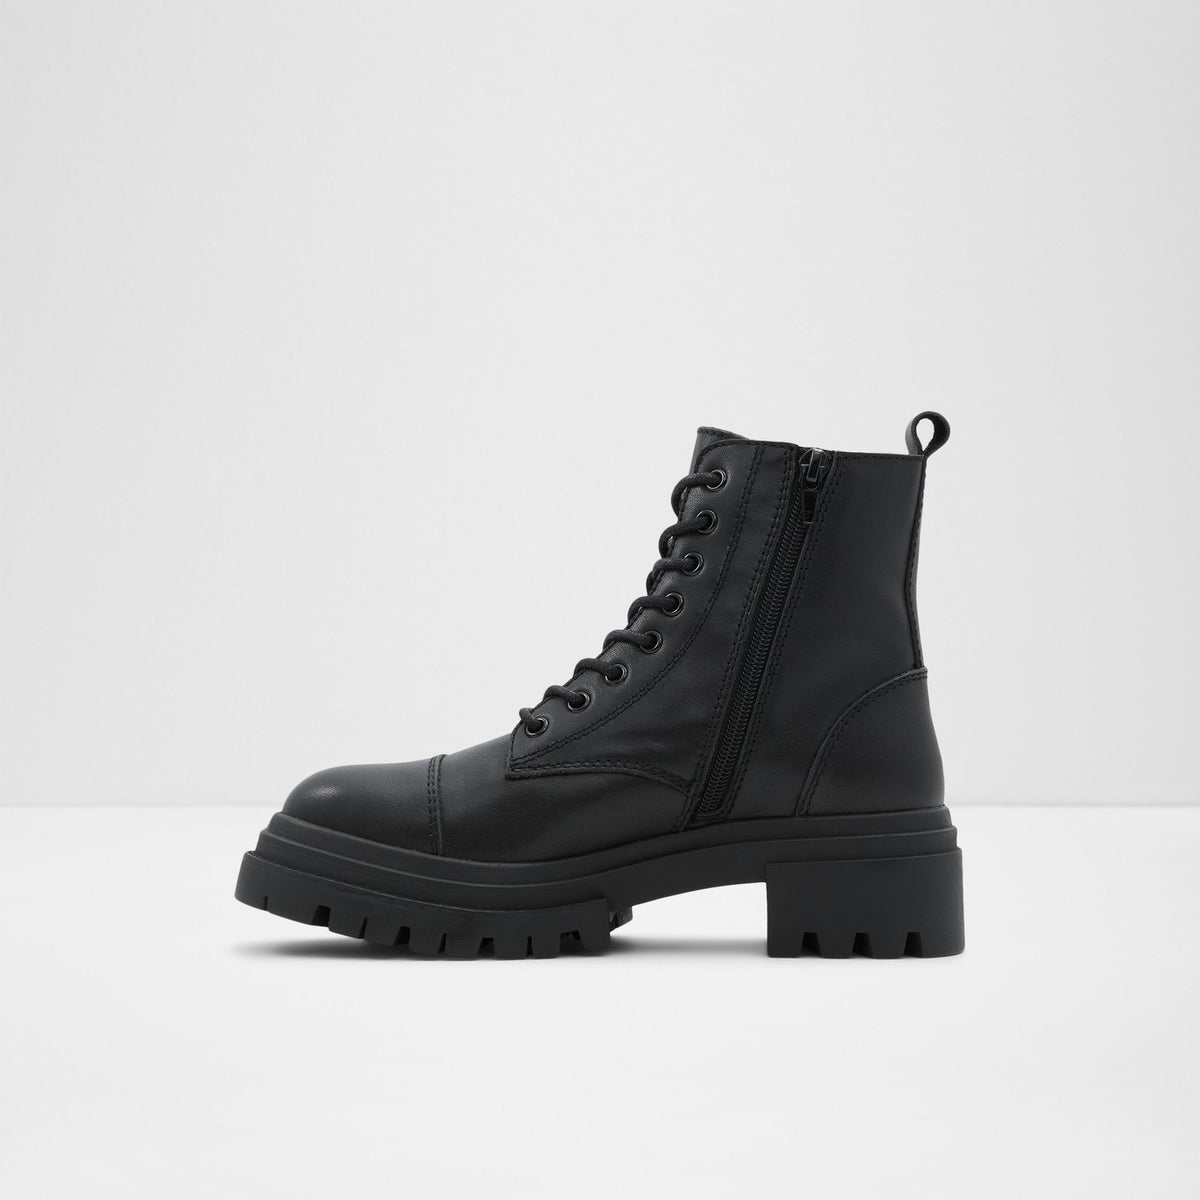 Aldo Women's Ankle Boots Bigmark (Black) – ALDO Shoes UK